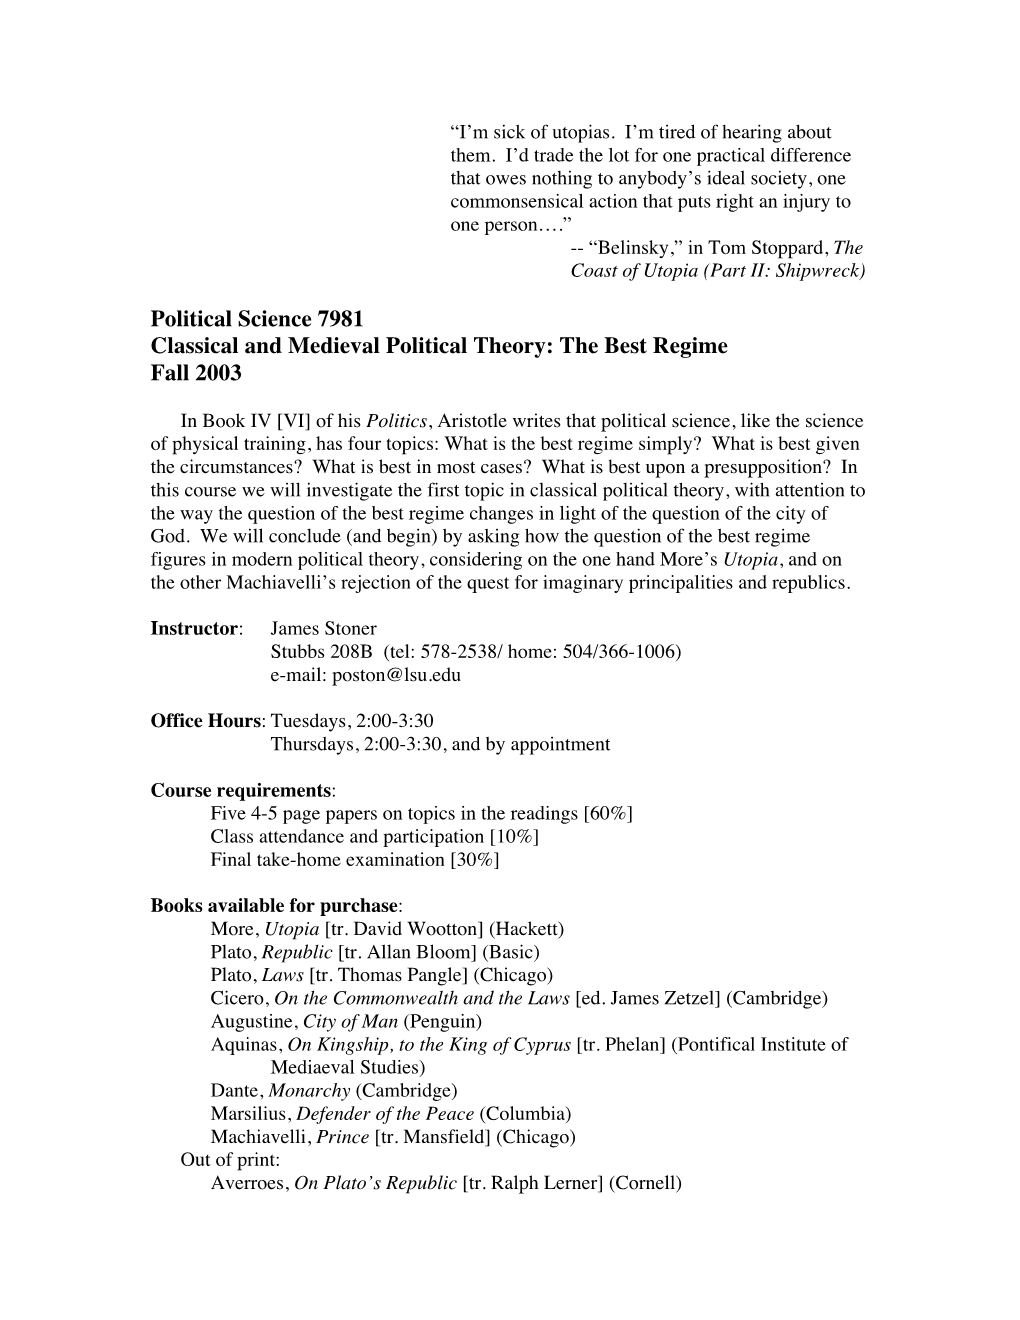 POLI 7981 — Seminar in Classical Political Thought